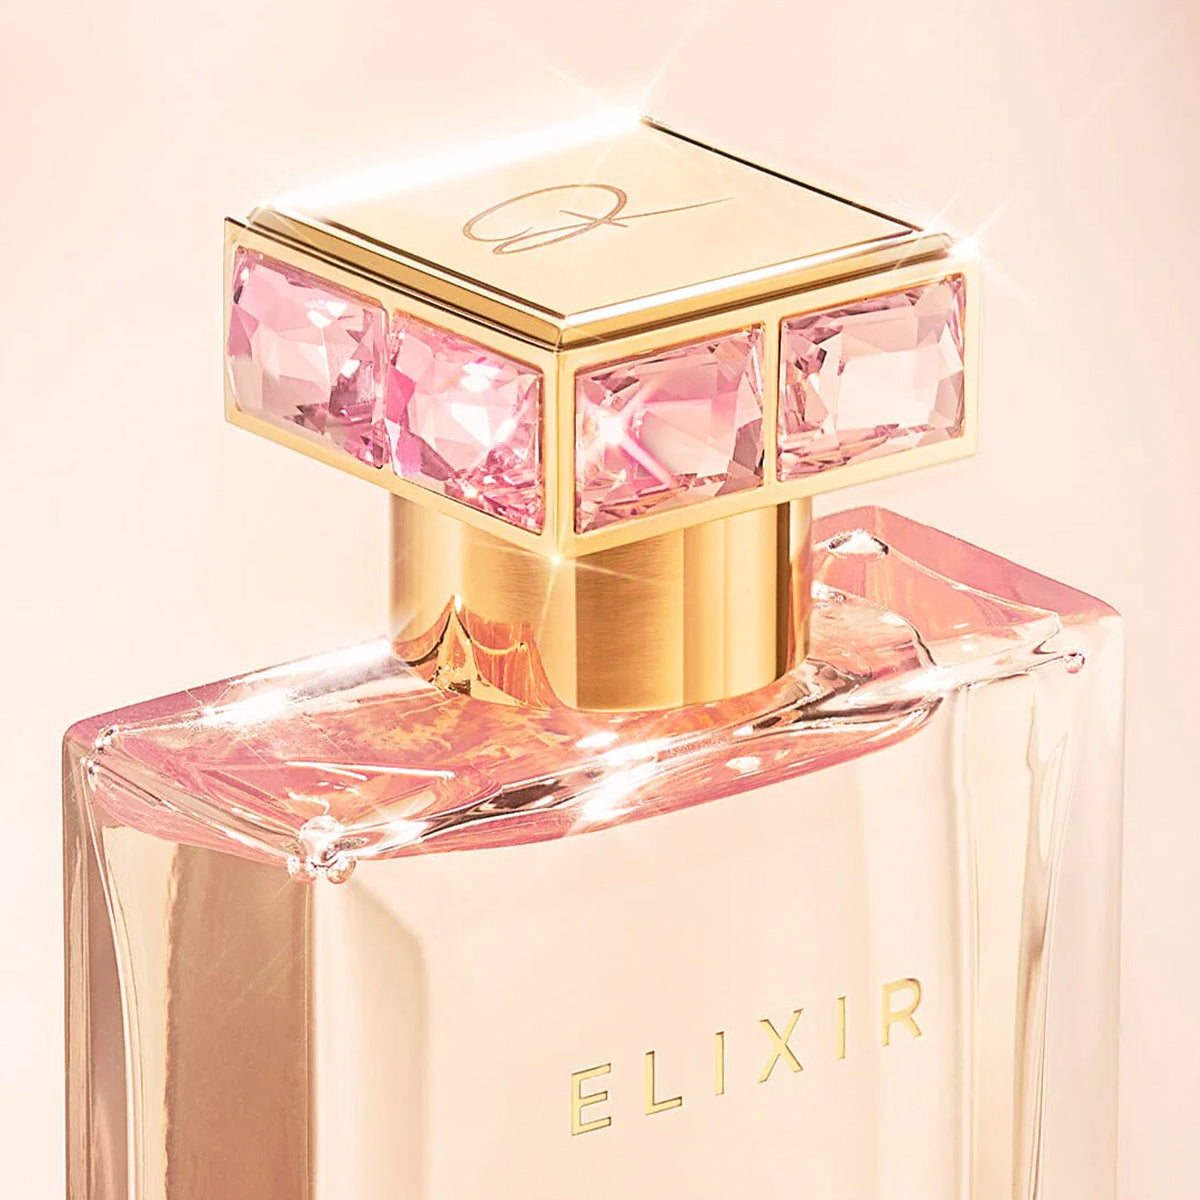 Elixir Pour Femme - Roja Parfums - EDP 75 ml